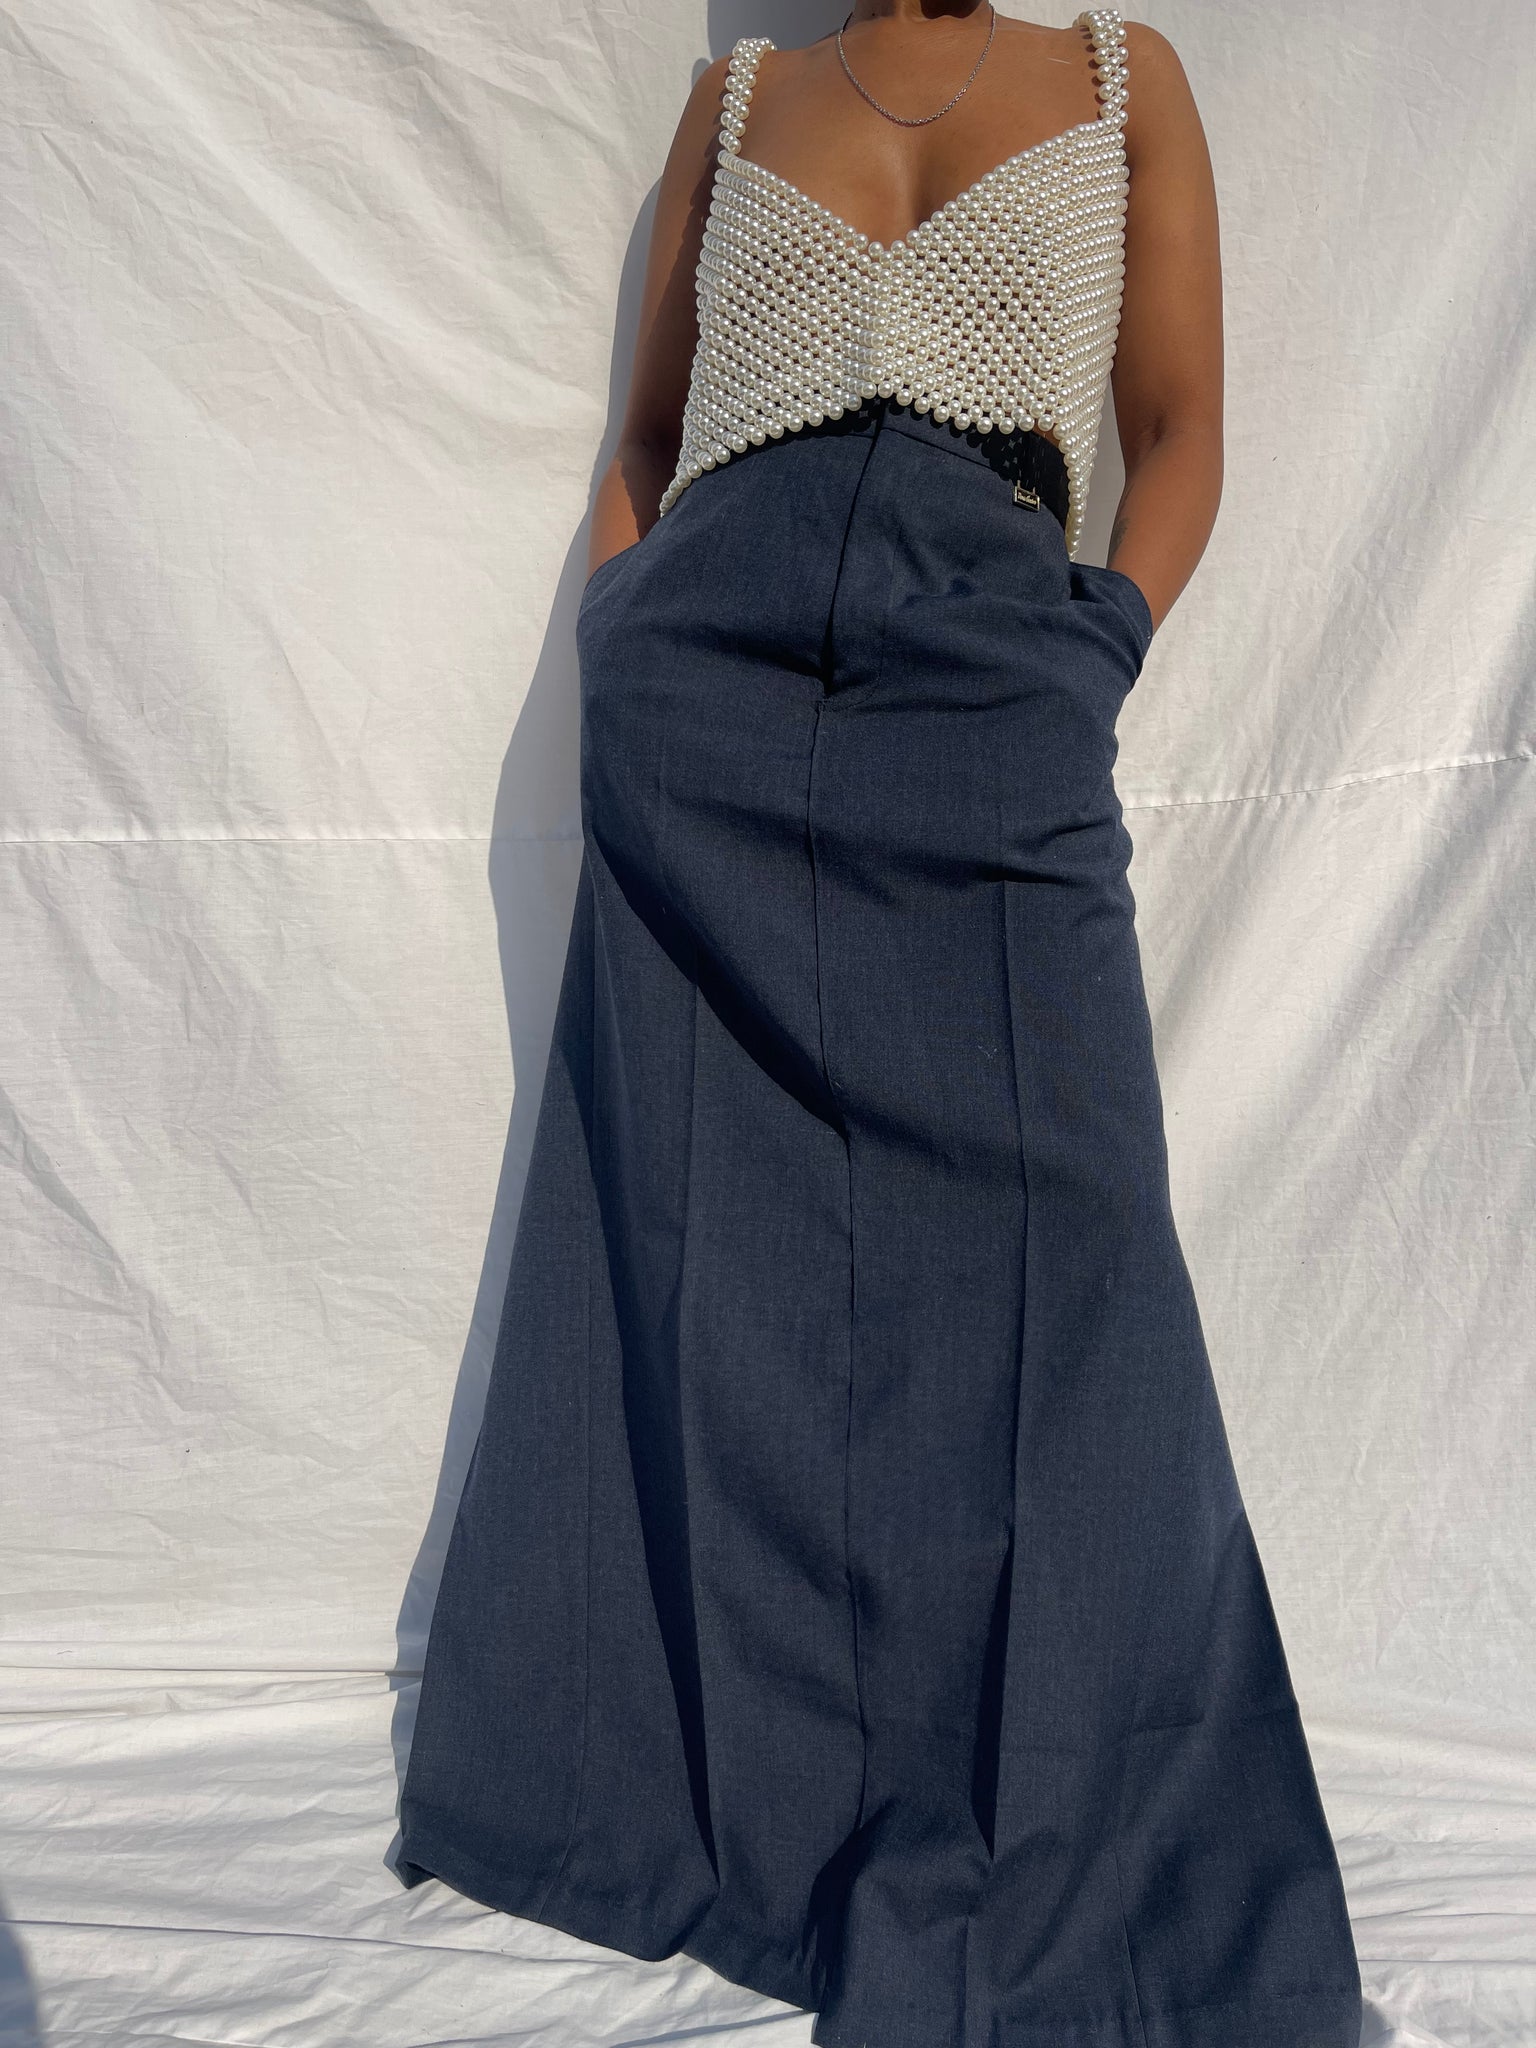 Reworked Skirt with Back Slit (36)